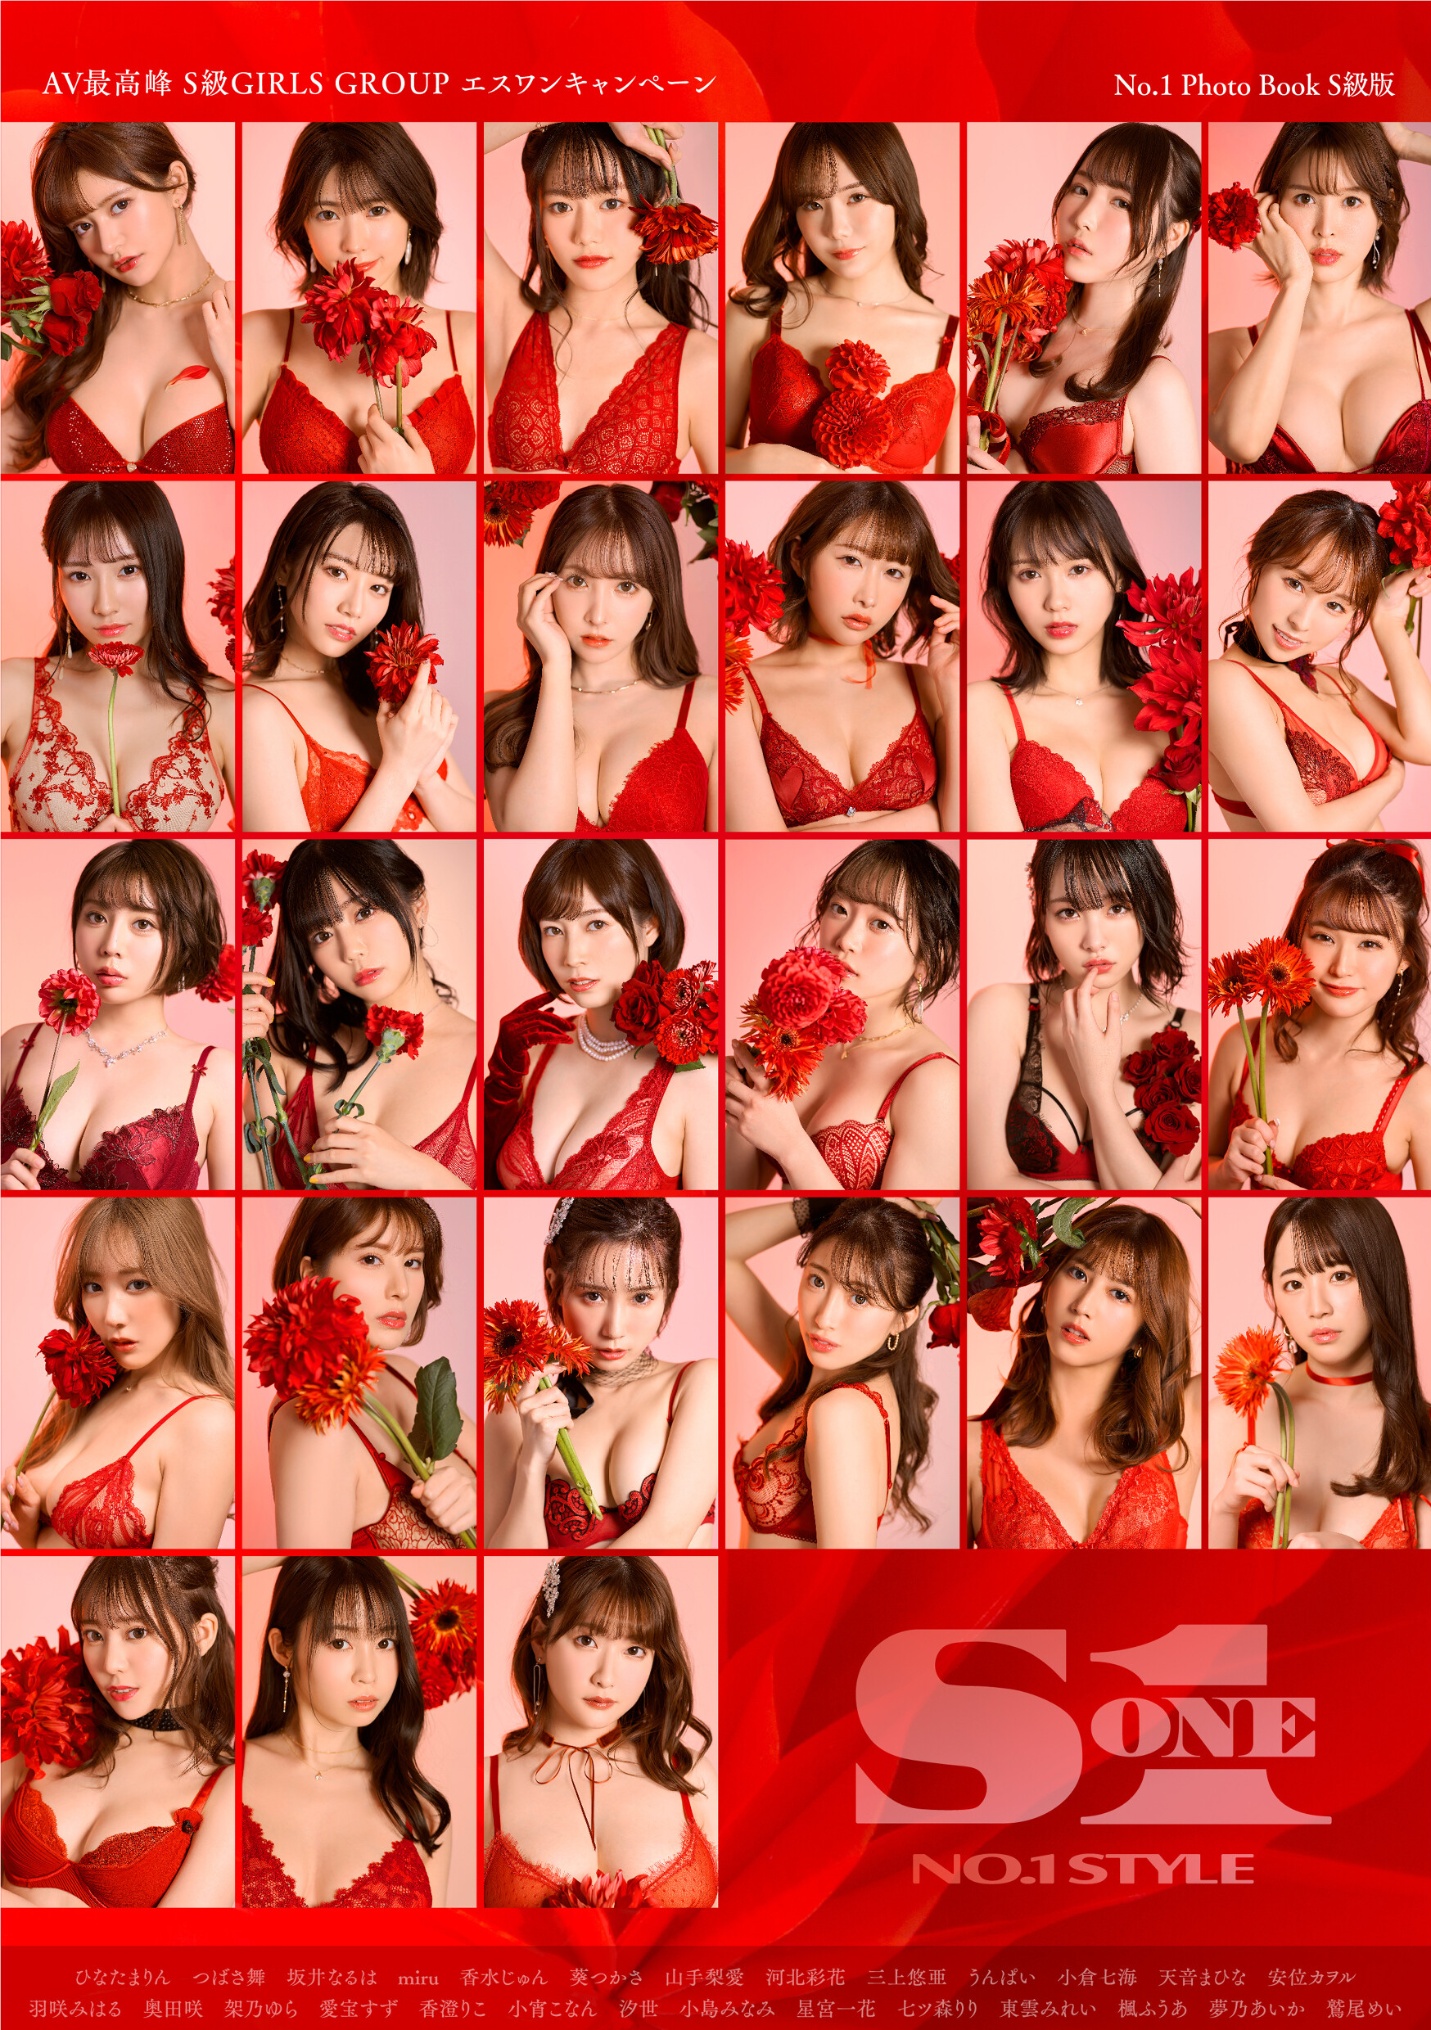 AV最高峰 S級GIRLS GROUP エスワンキャンペーン No.1 Photo Book S級版